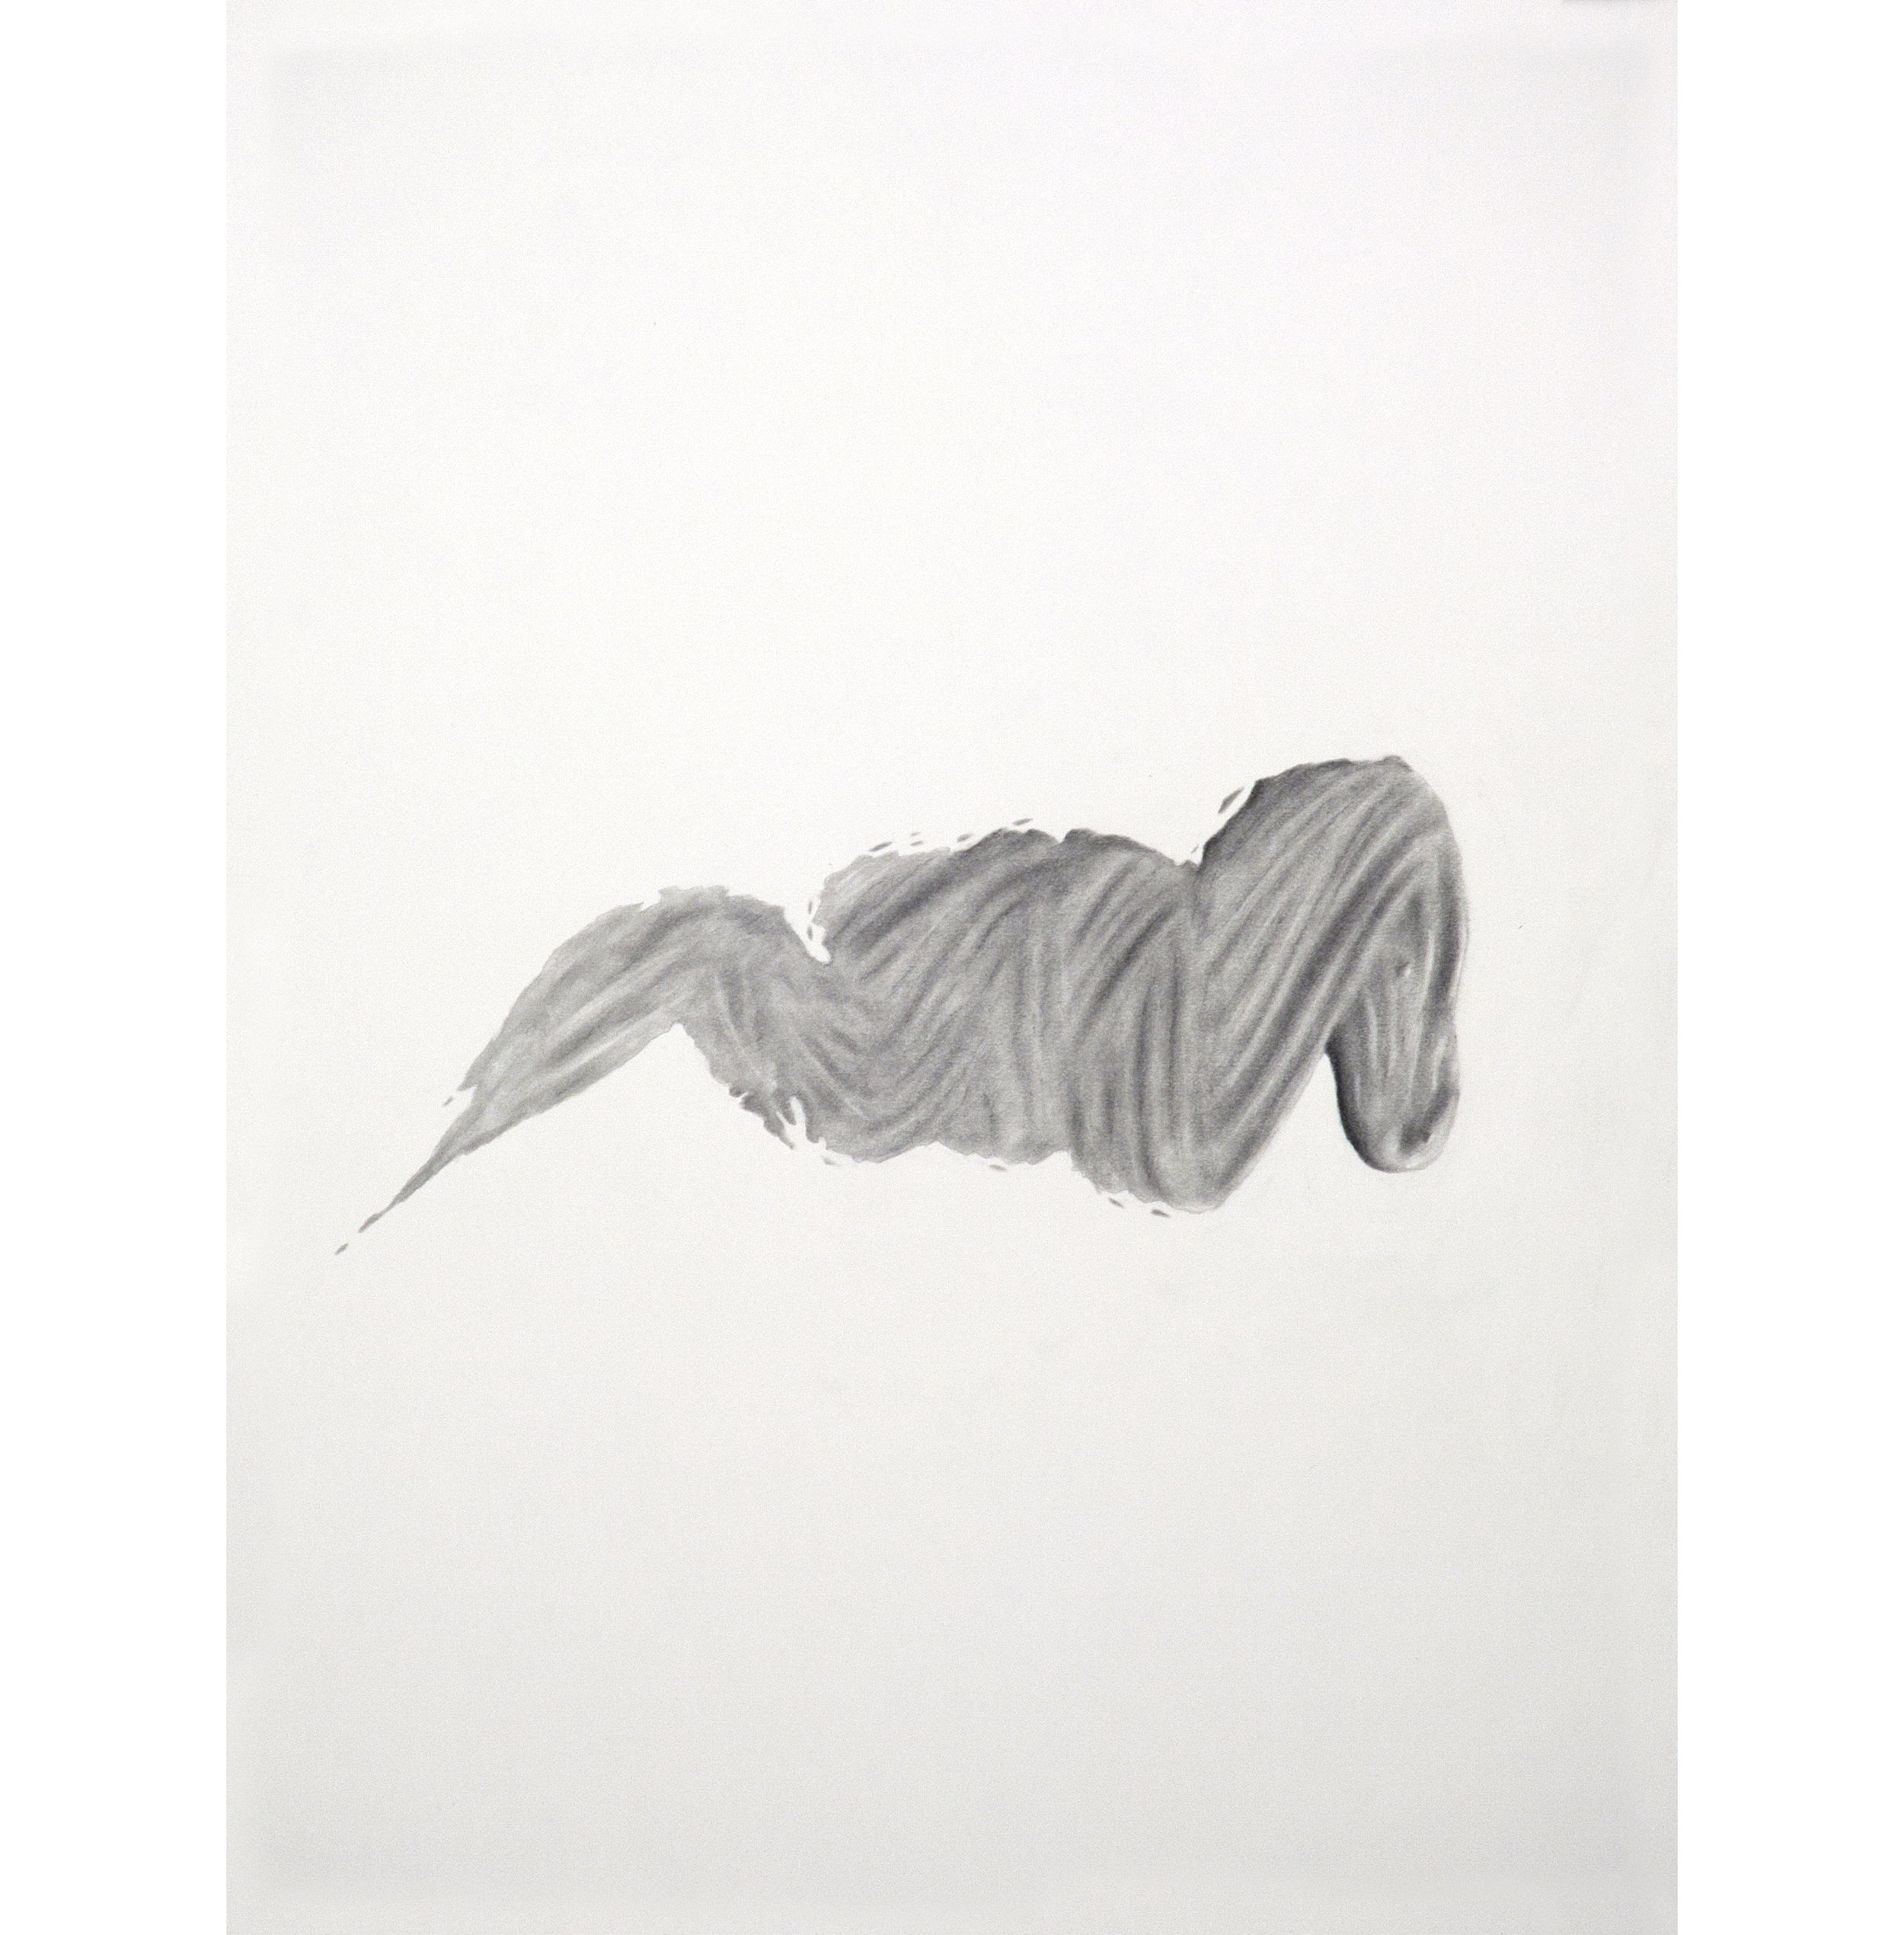 Lexicon 6, 2013, graphite on paper, 24” x 18”